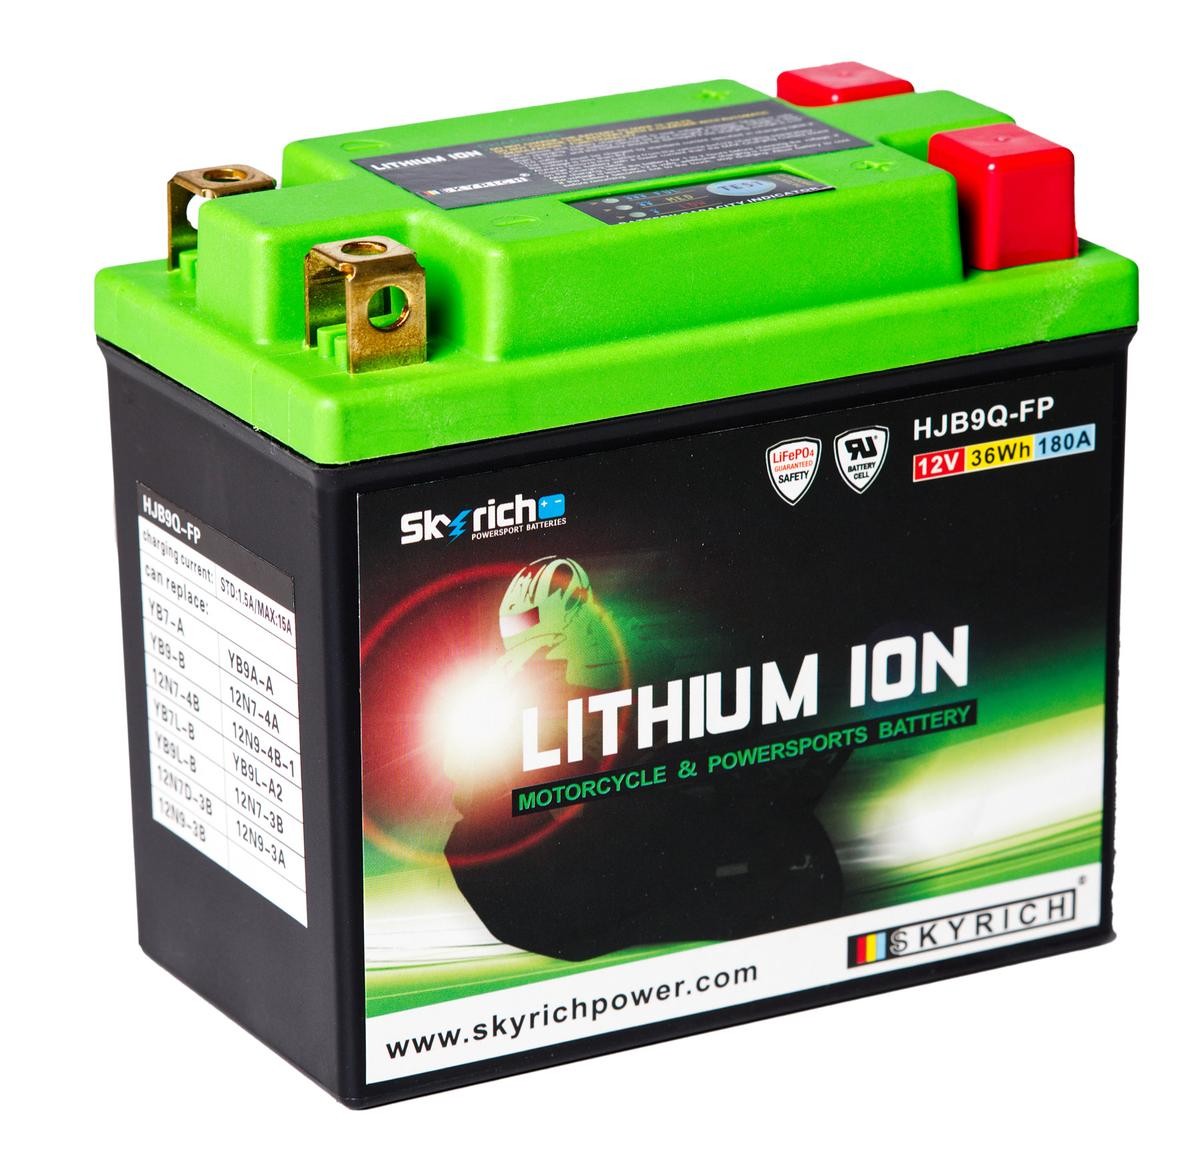 VESPA LXV Batterie 12V 3Ah 180A N Li-Ionen-Batterie SKYRICH LITHIUM ION HJB9Q-FP